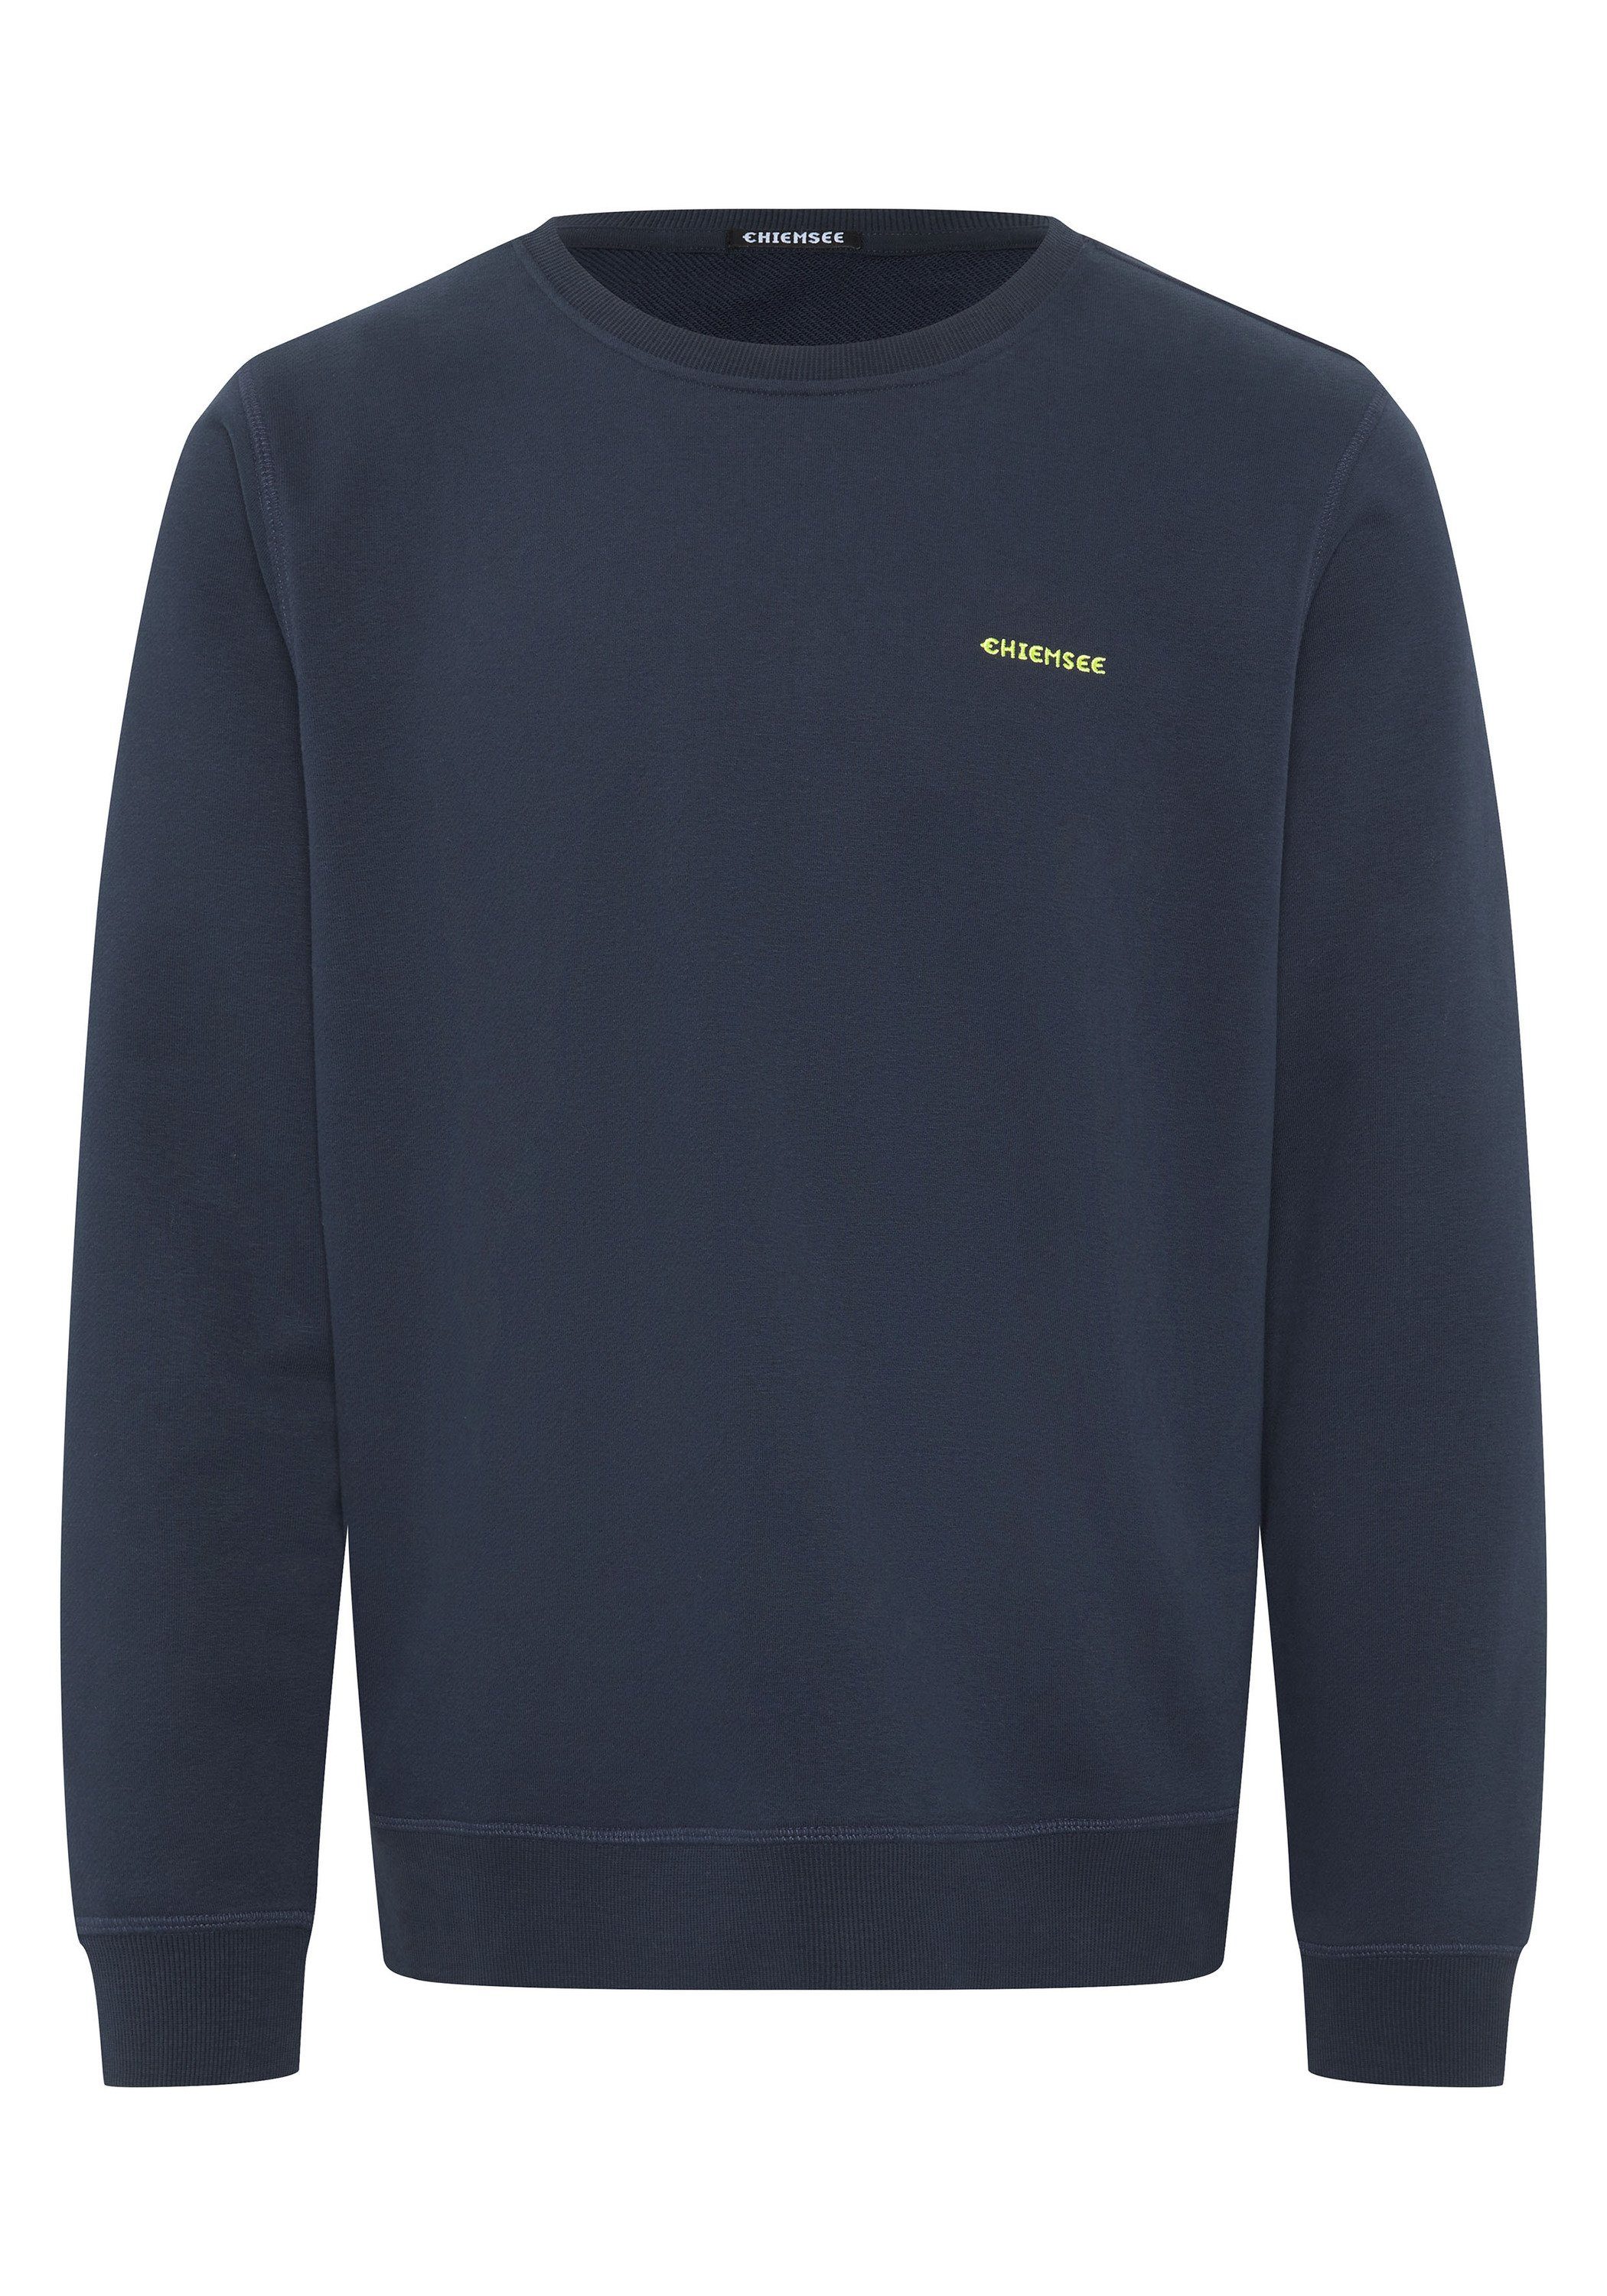 Sweater 1 Night mit Chiemsee Jumper-Motiv Sweatshirt Sky 19-3924